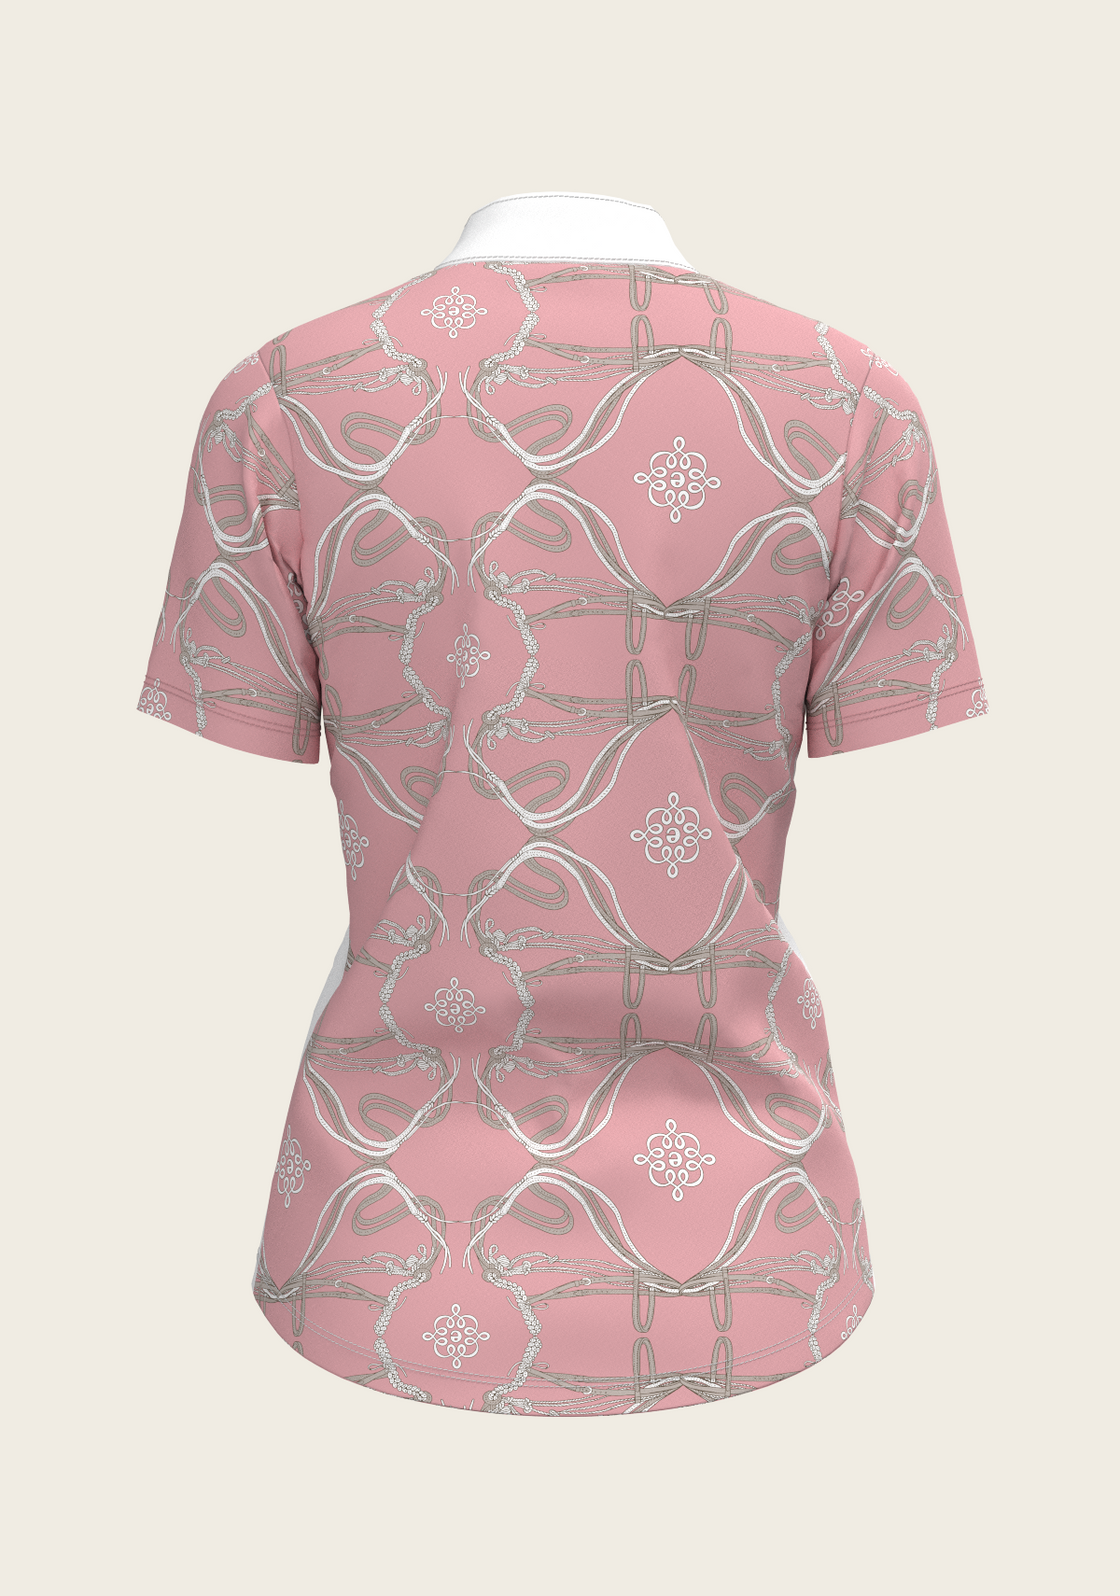 Roped Bridles on Rose Short Sleeve Show Shirt